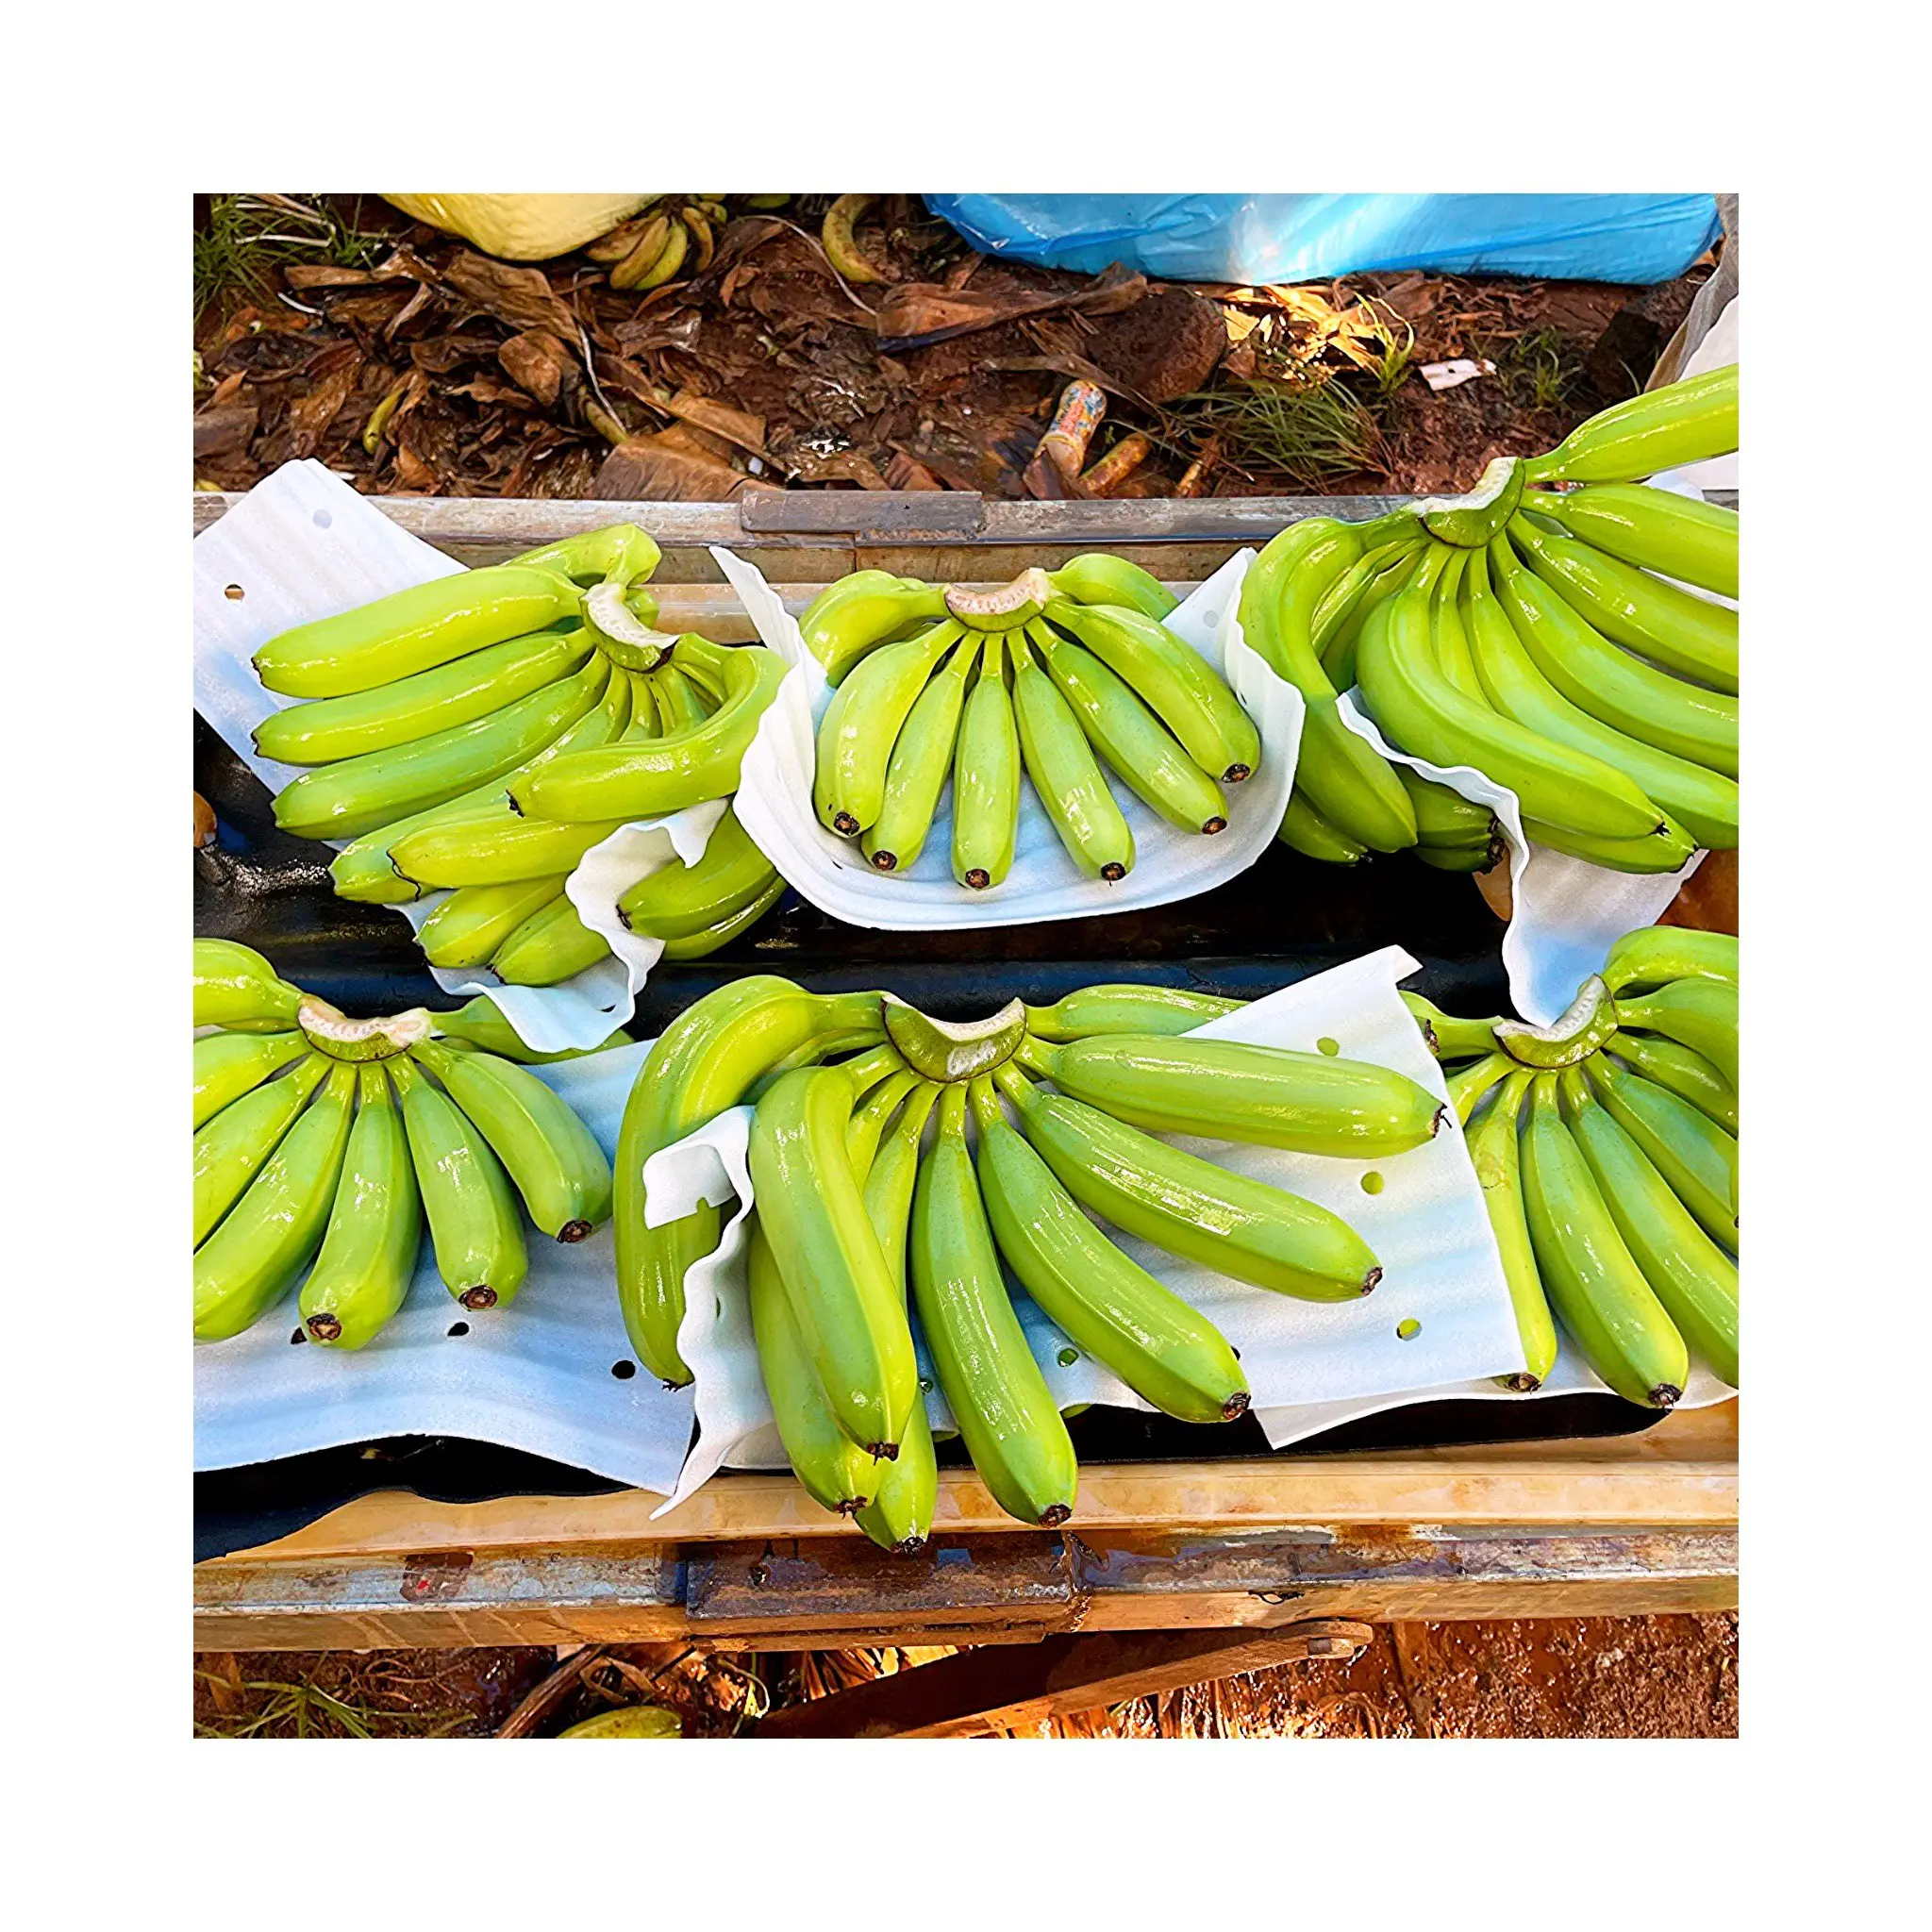 TOP SUPPLIER Premium Fresh Cavendish Bananas G9 Banana For Sale Custom Logo Green/ Yellow Color Best Price From Vietnam 99GD